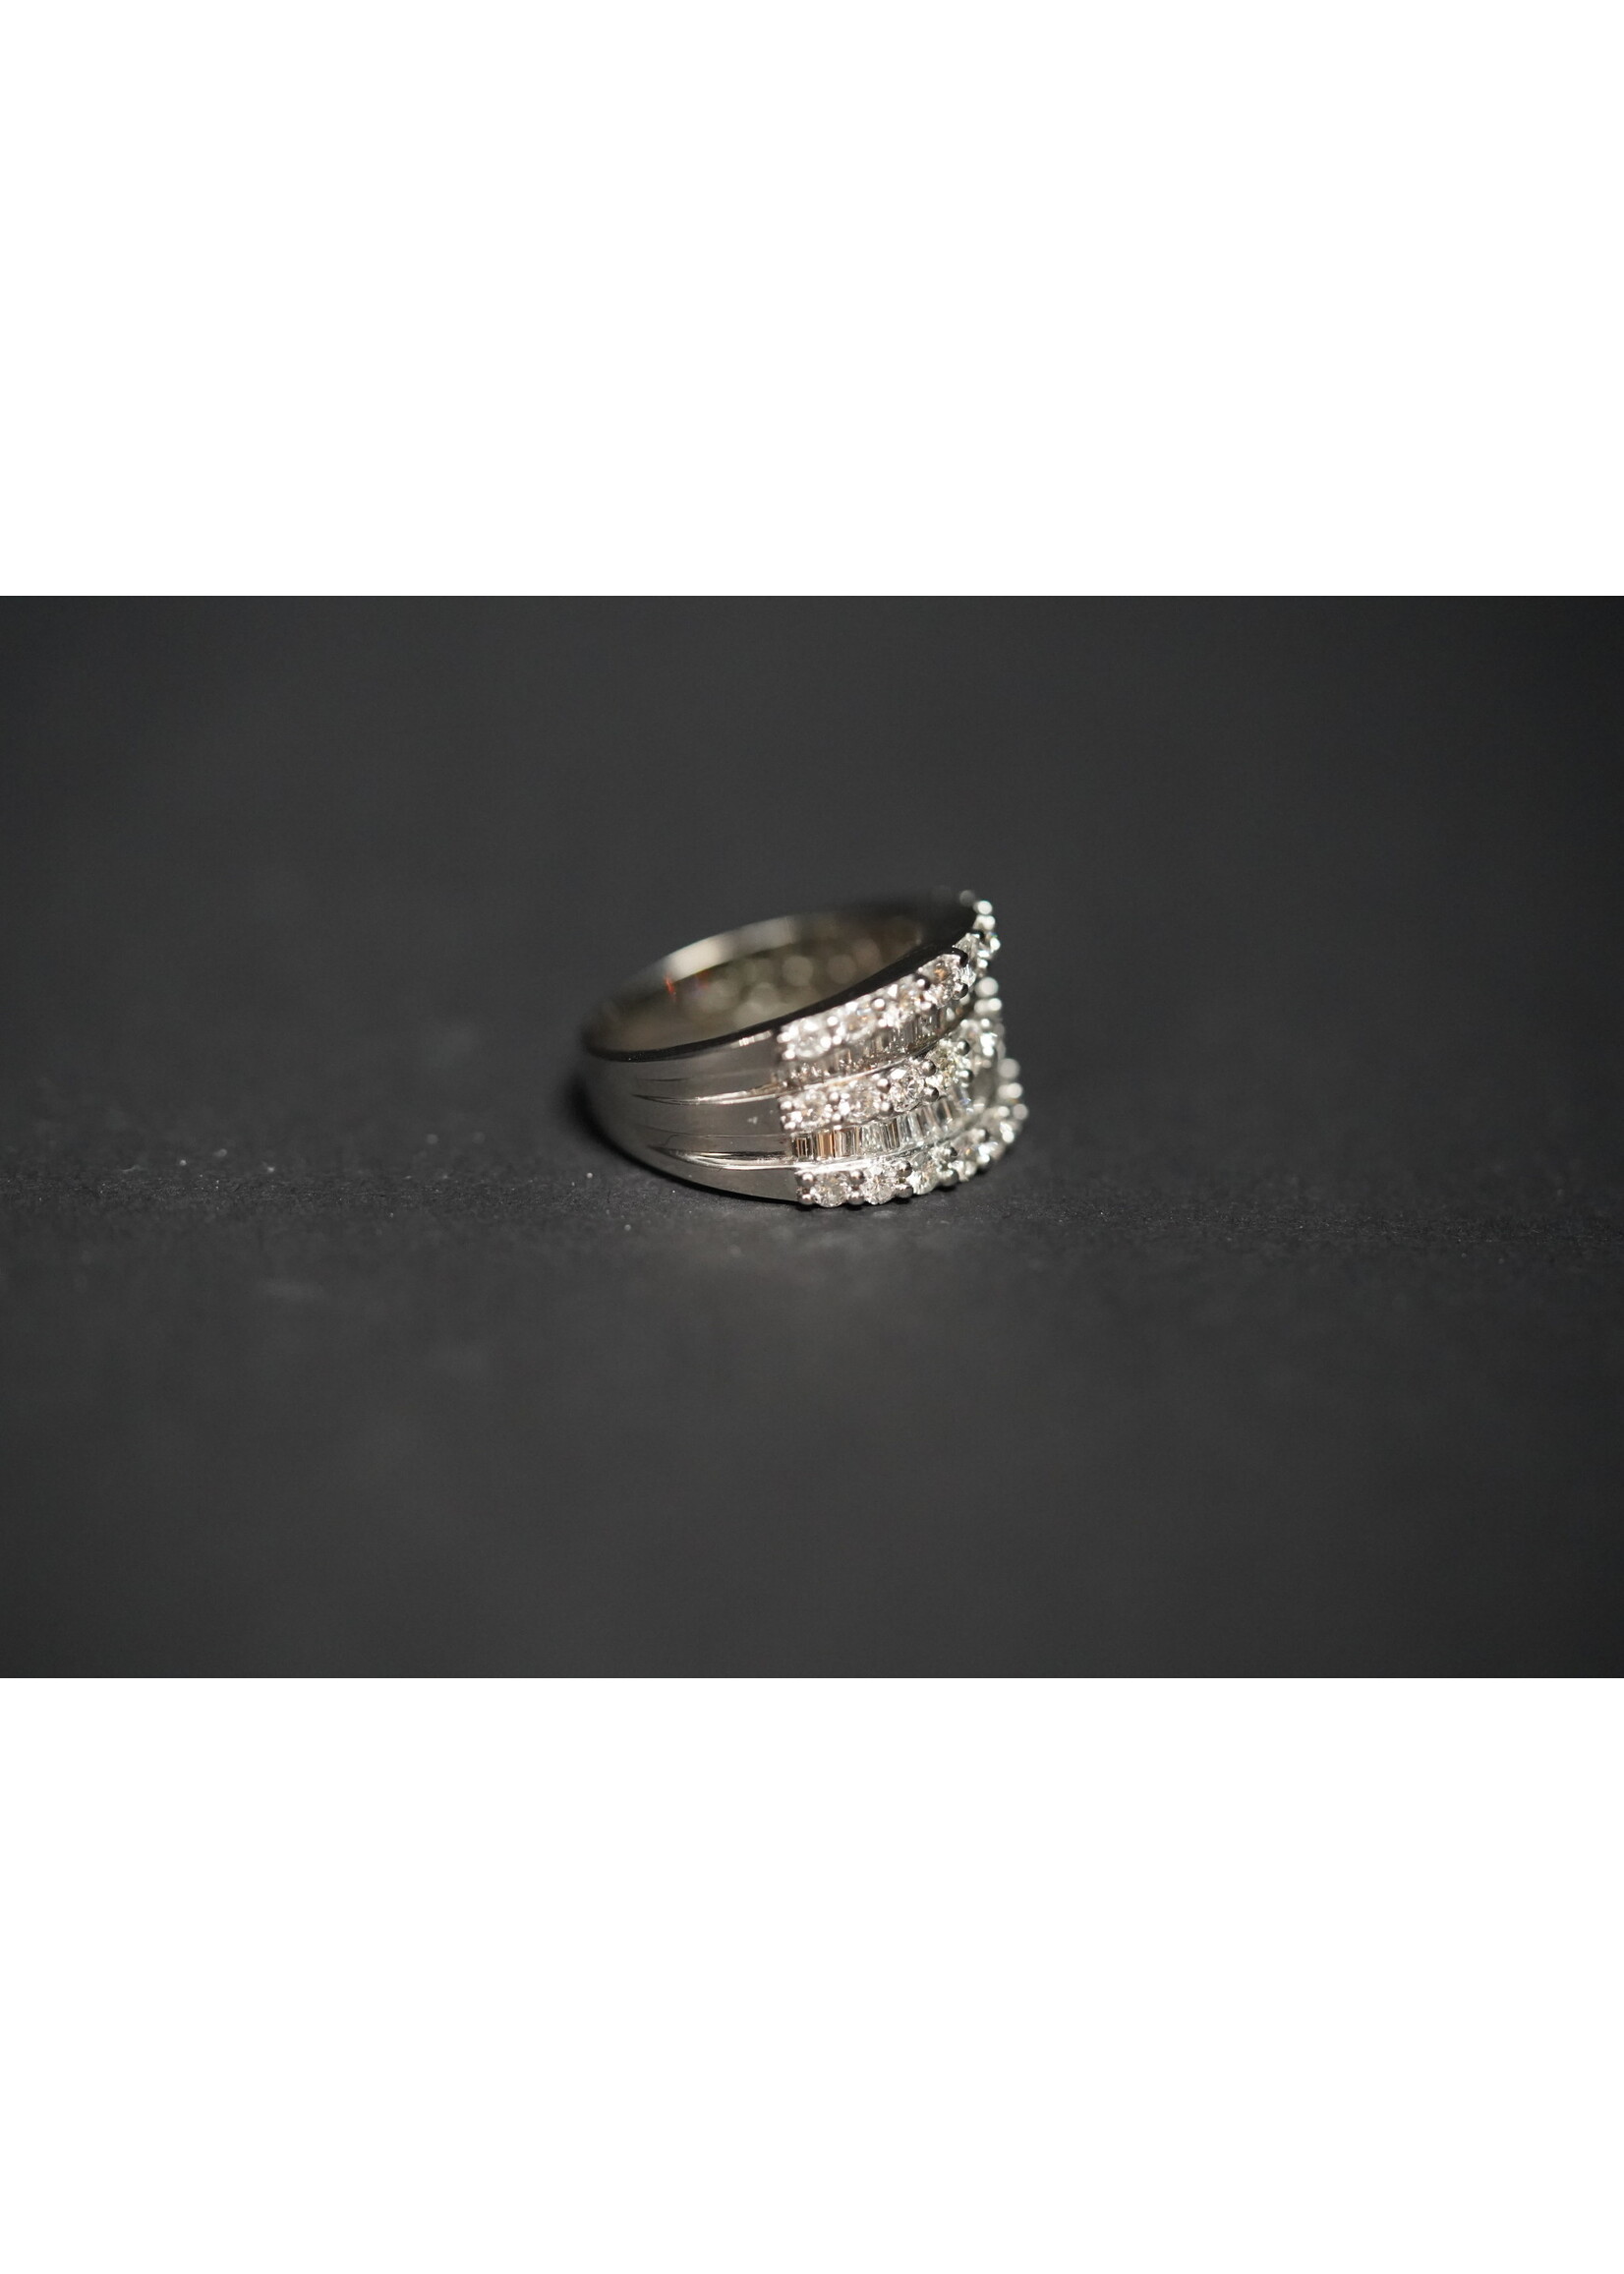 14KW 7.68g 2.30ctw Diamond Fashion Ring (size 7.25)